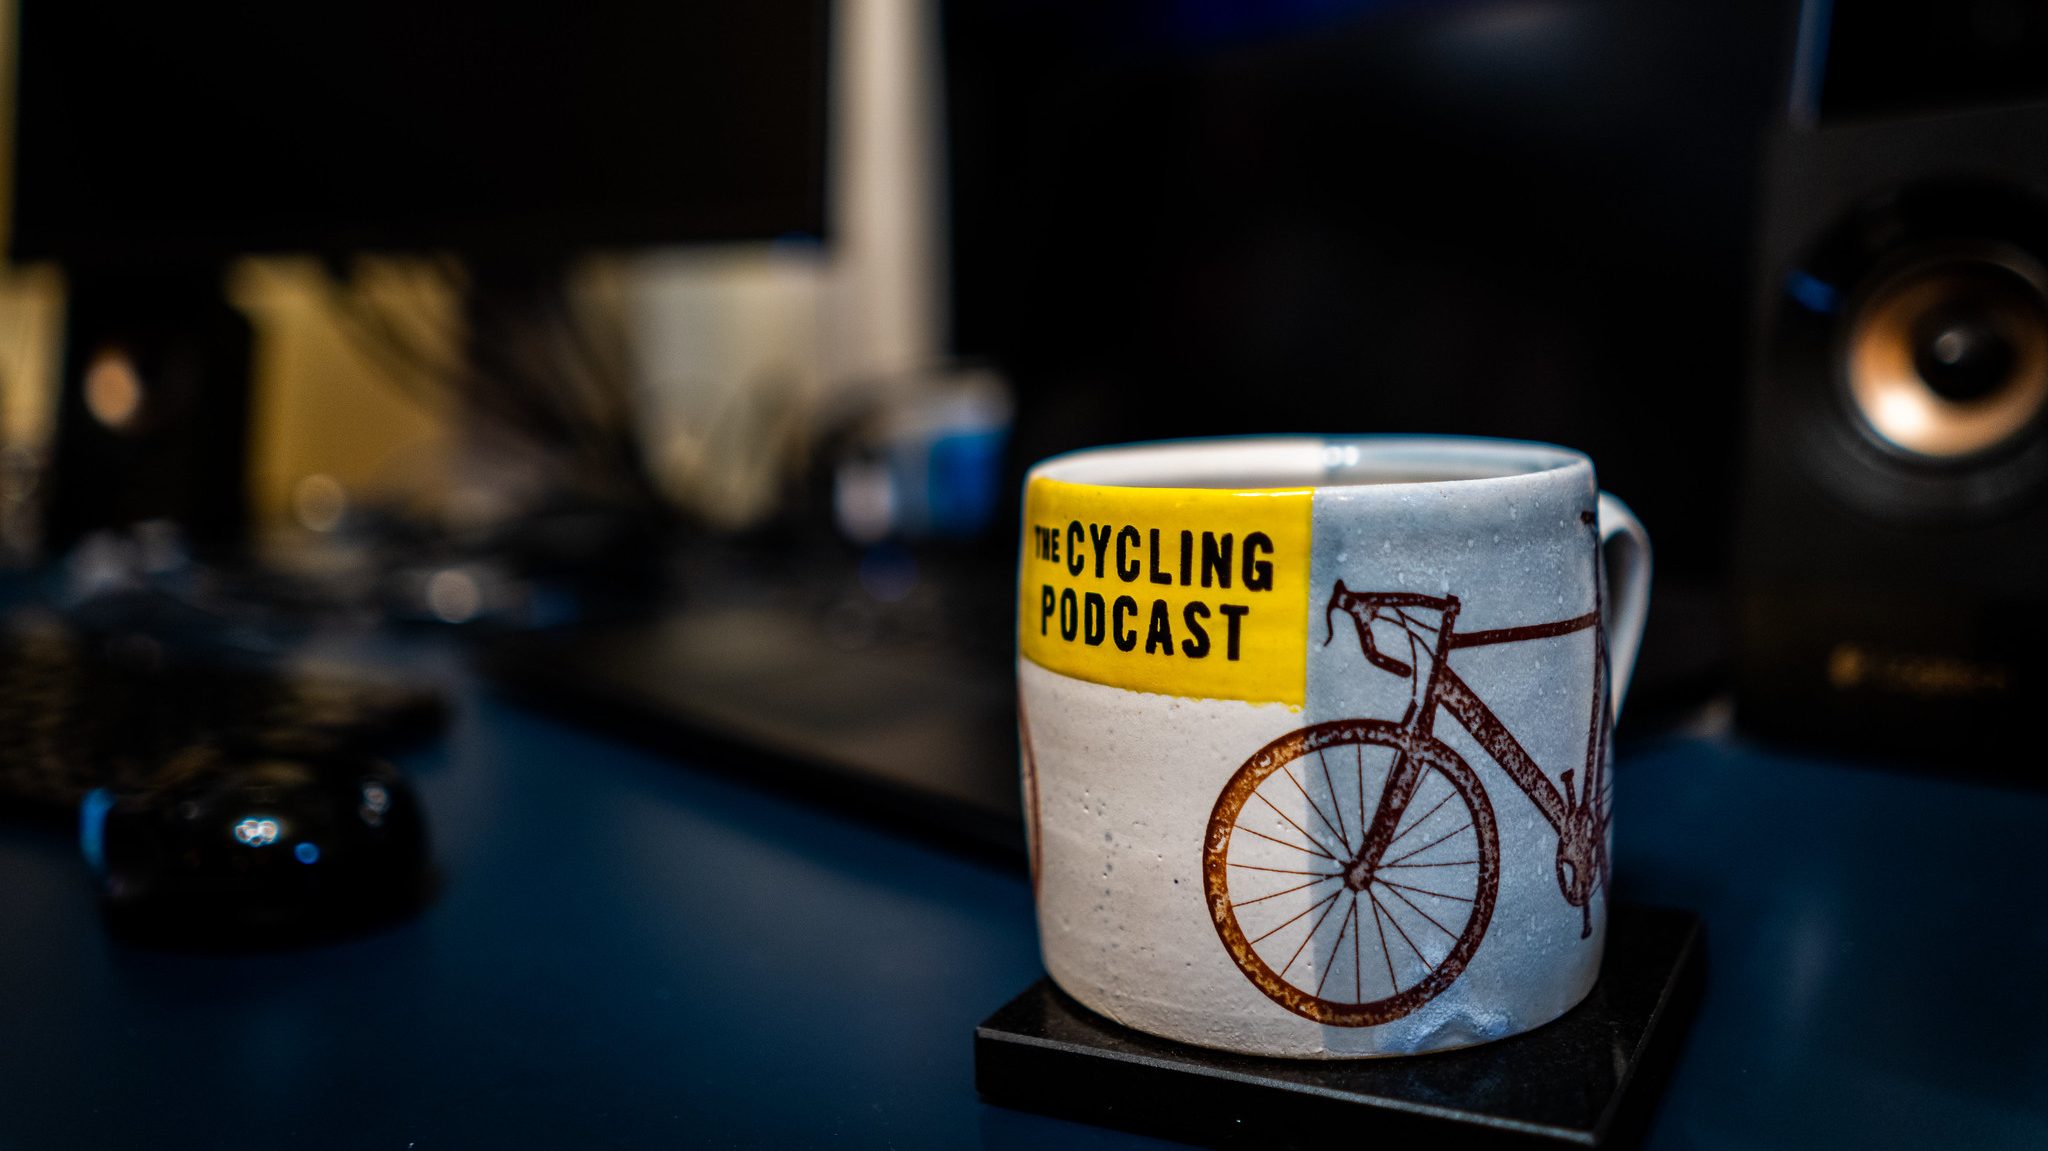 The Cycling Podcast Mug